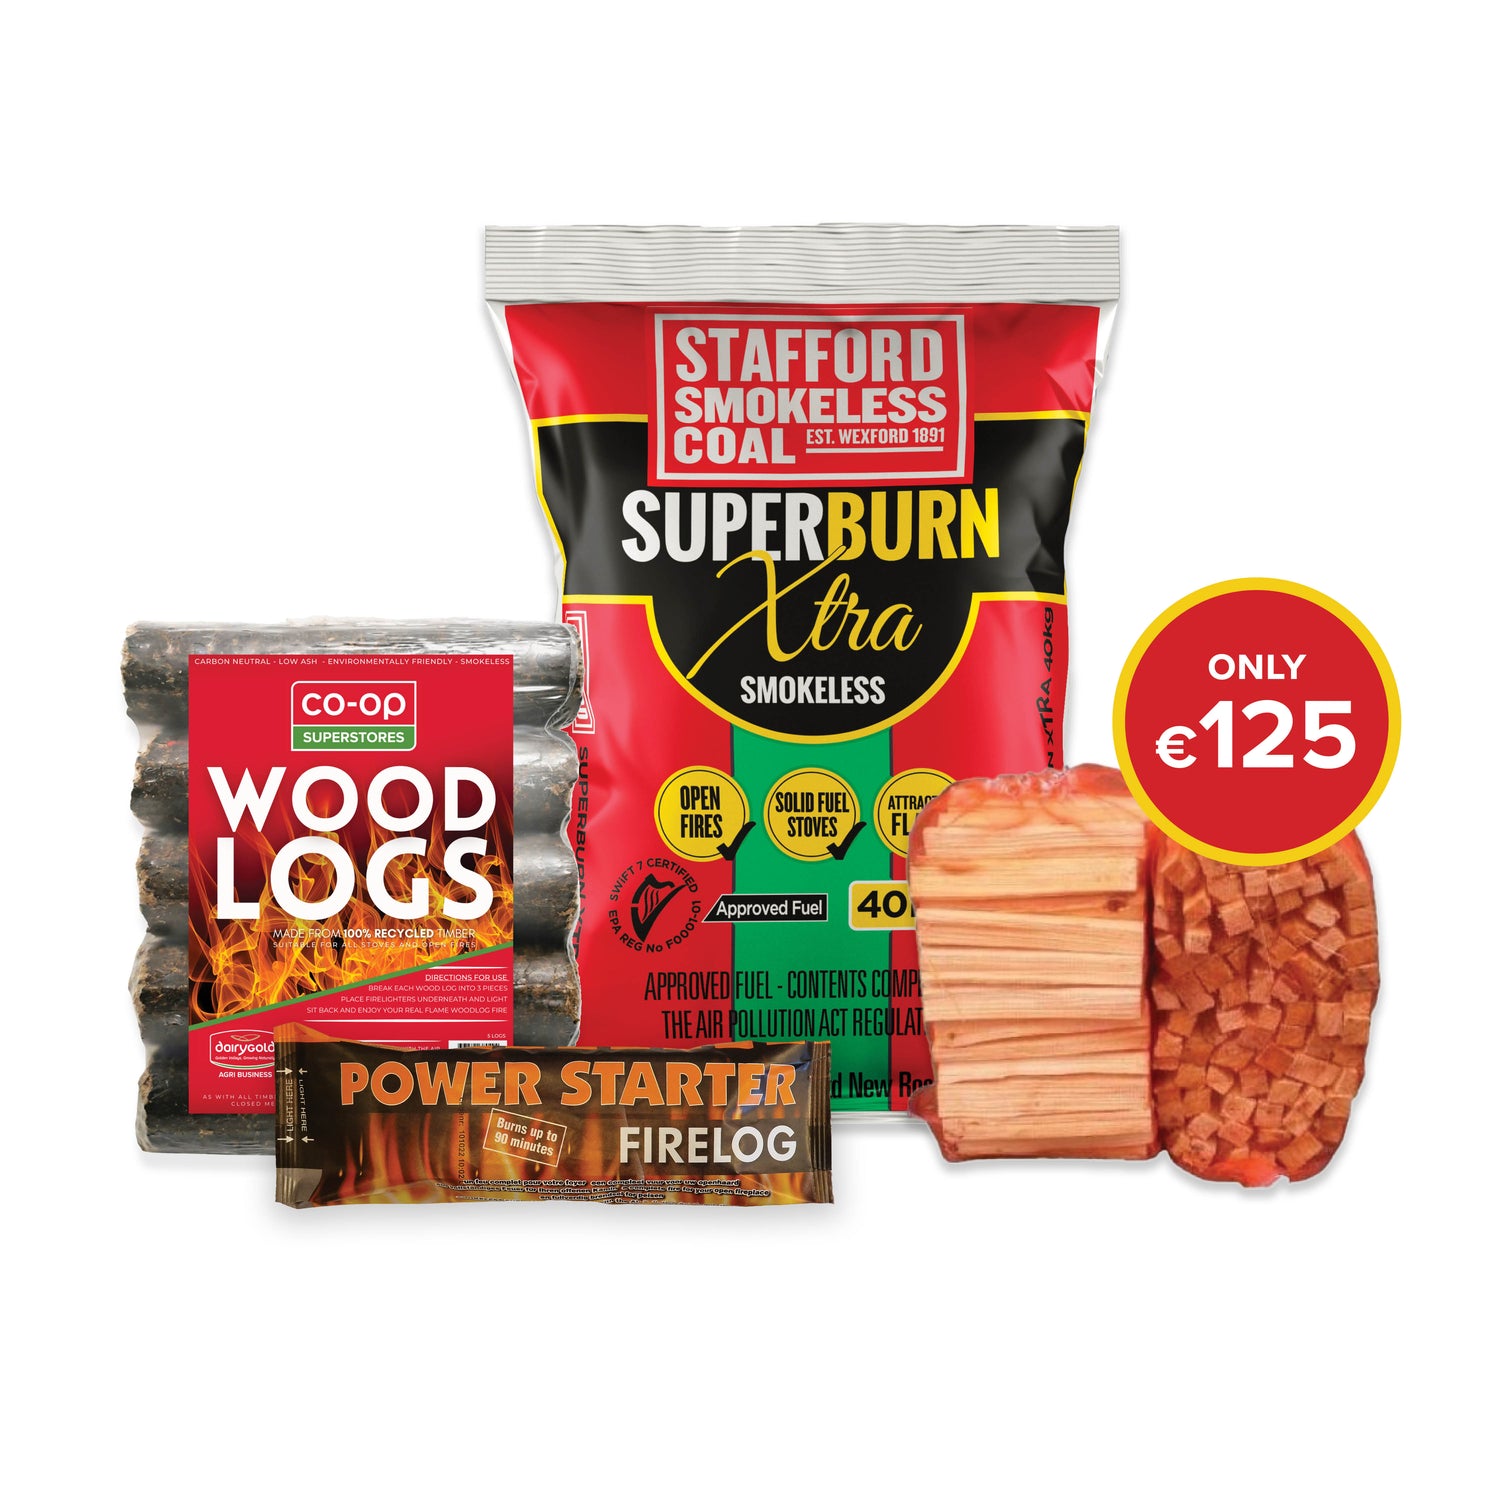 Buy 3 bag Superburn 40kg, 10 Firelogs, 3 bags of Kindling and 3 bale of Woods logs 5s for €125